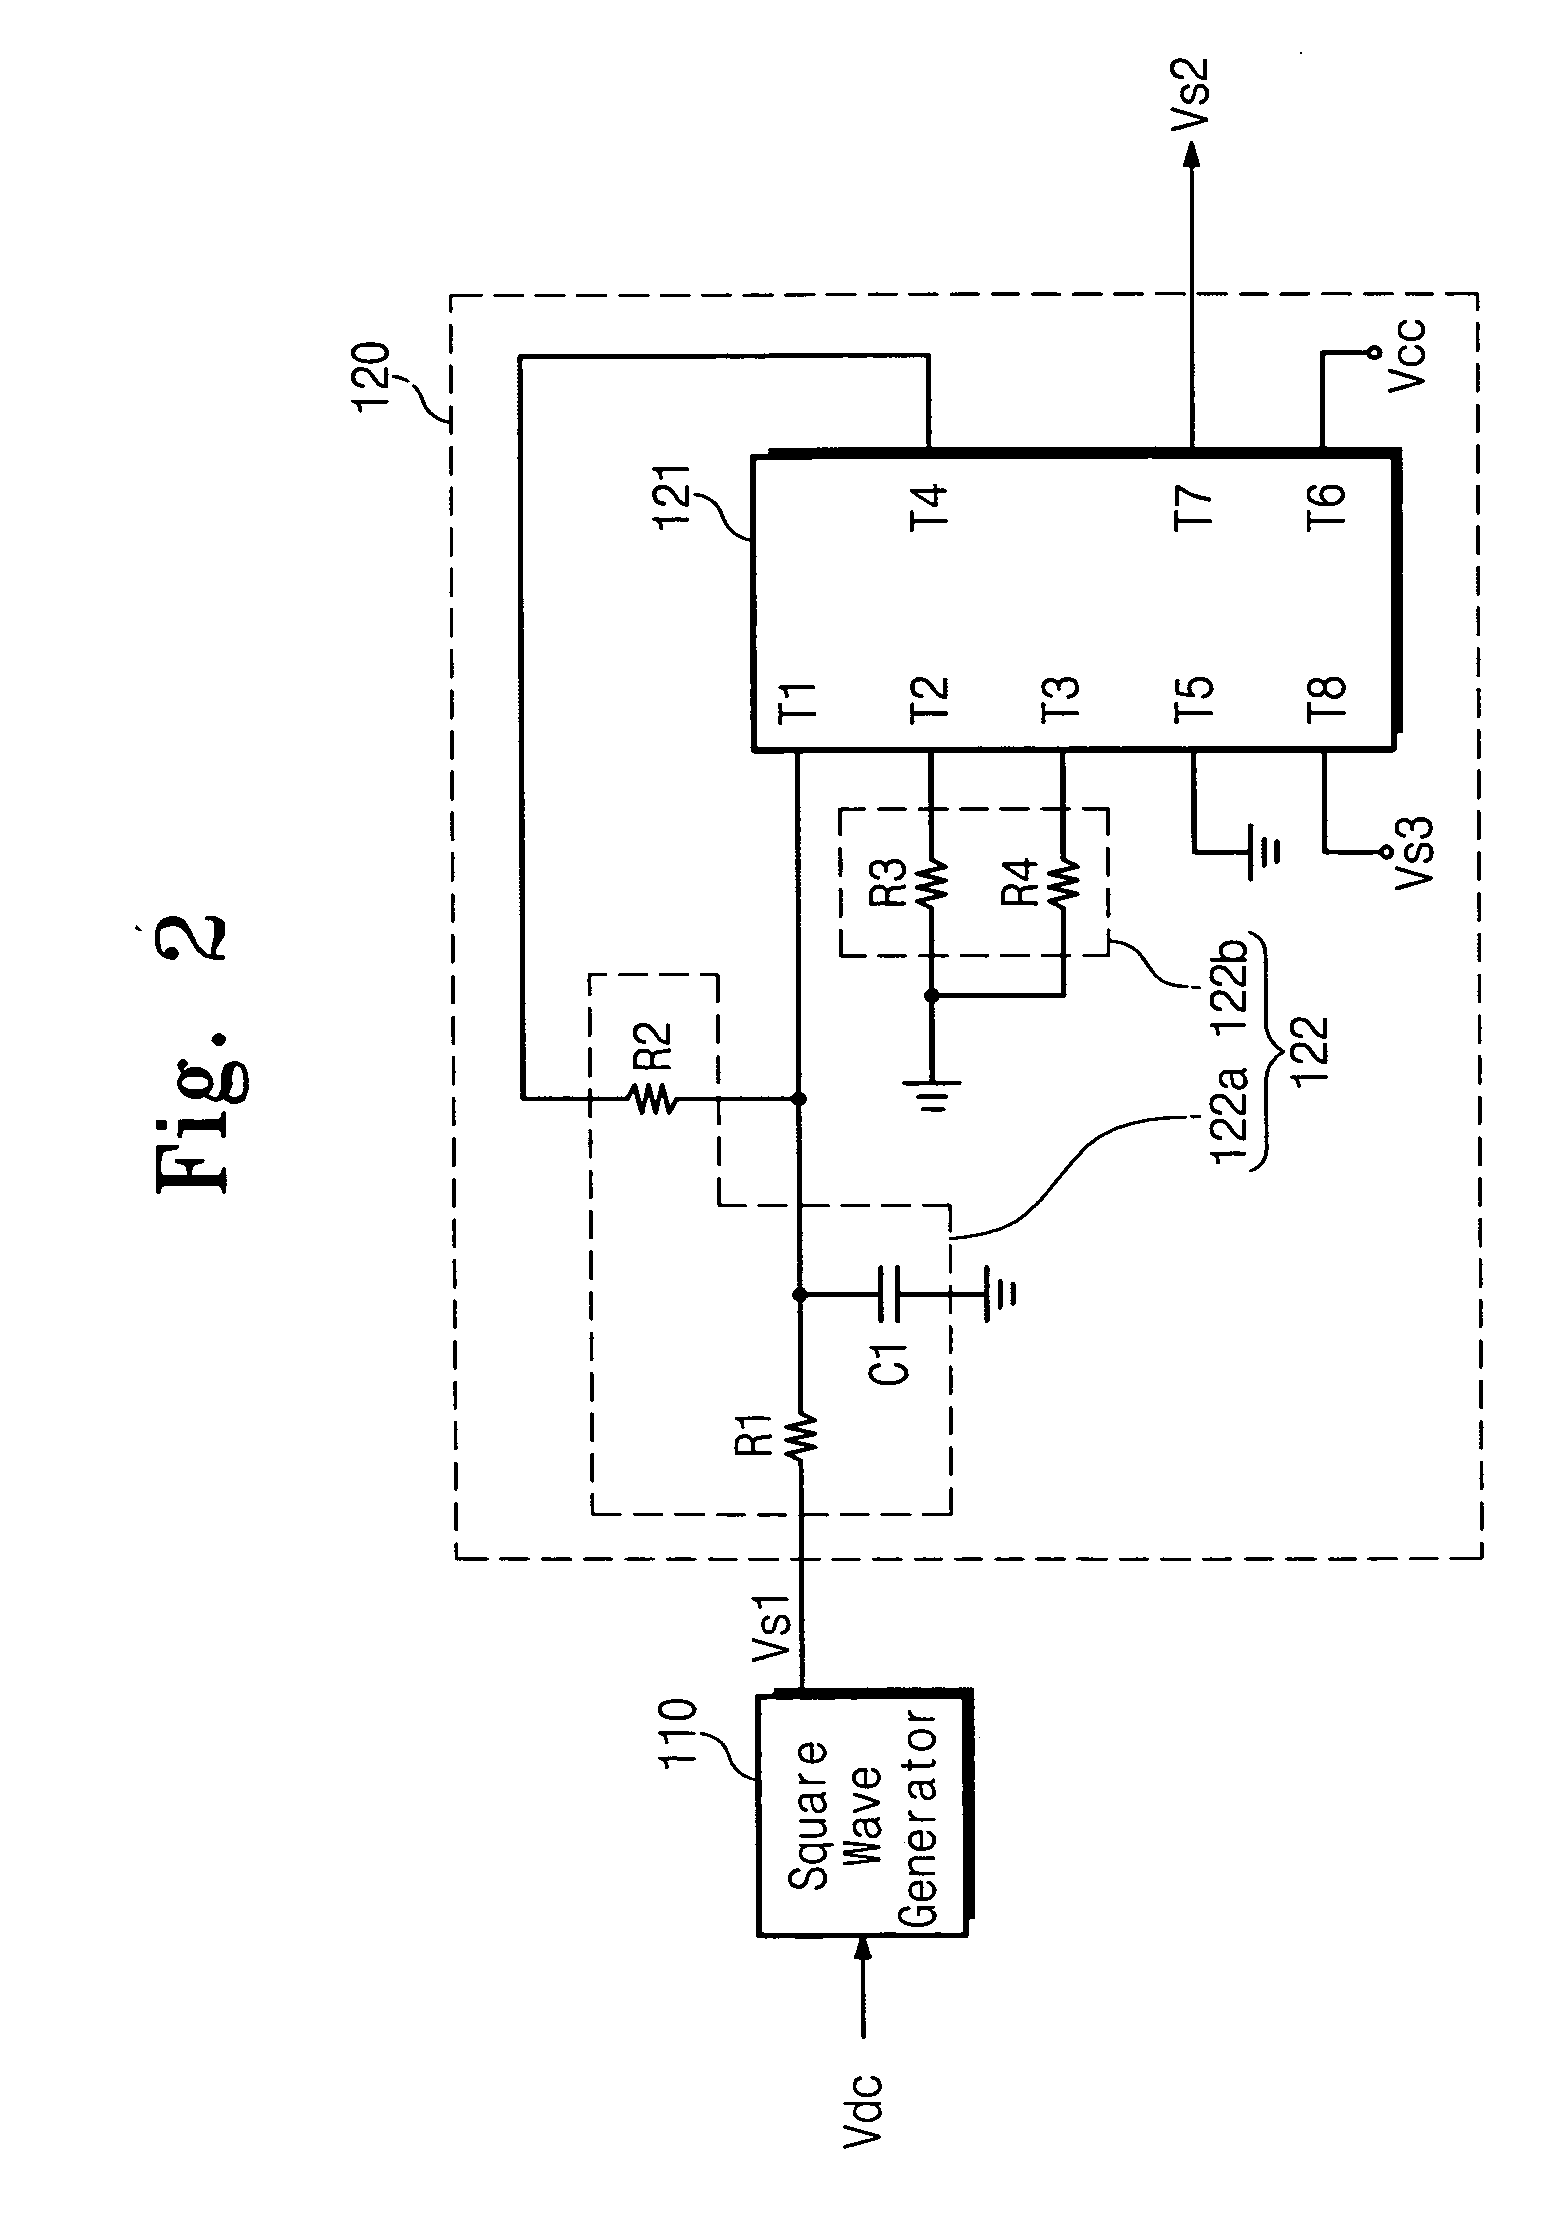 Lamp driving circuit, inverter board and display apparatus having the same